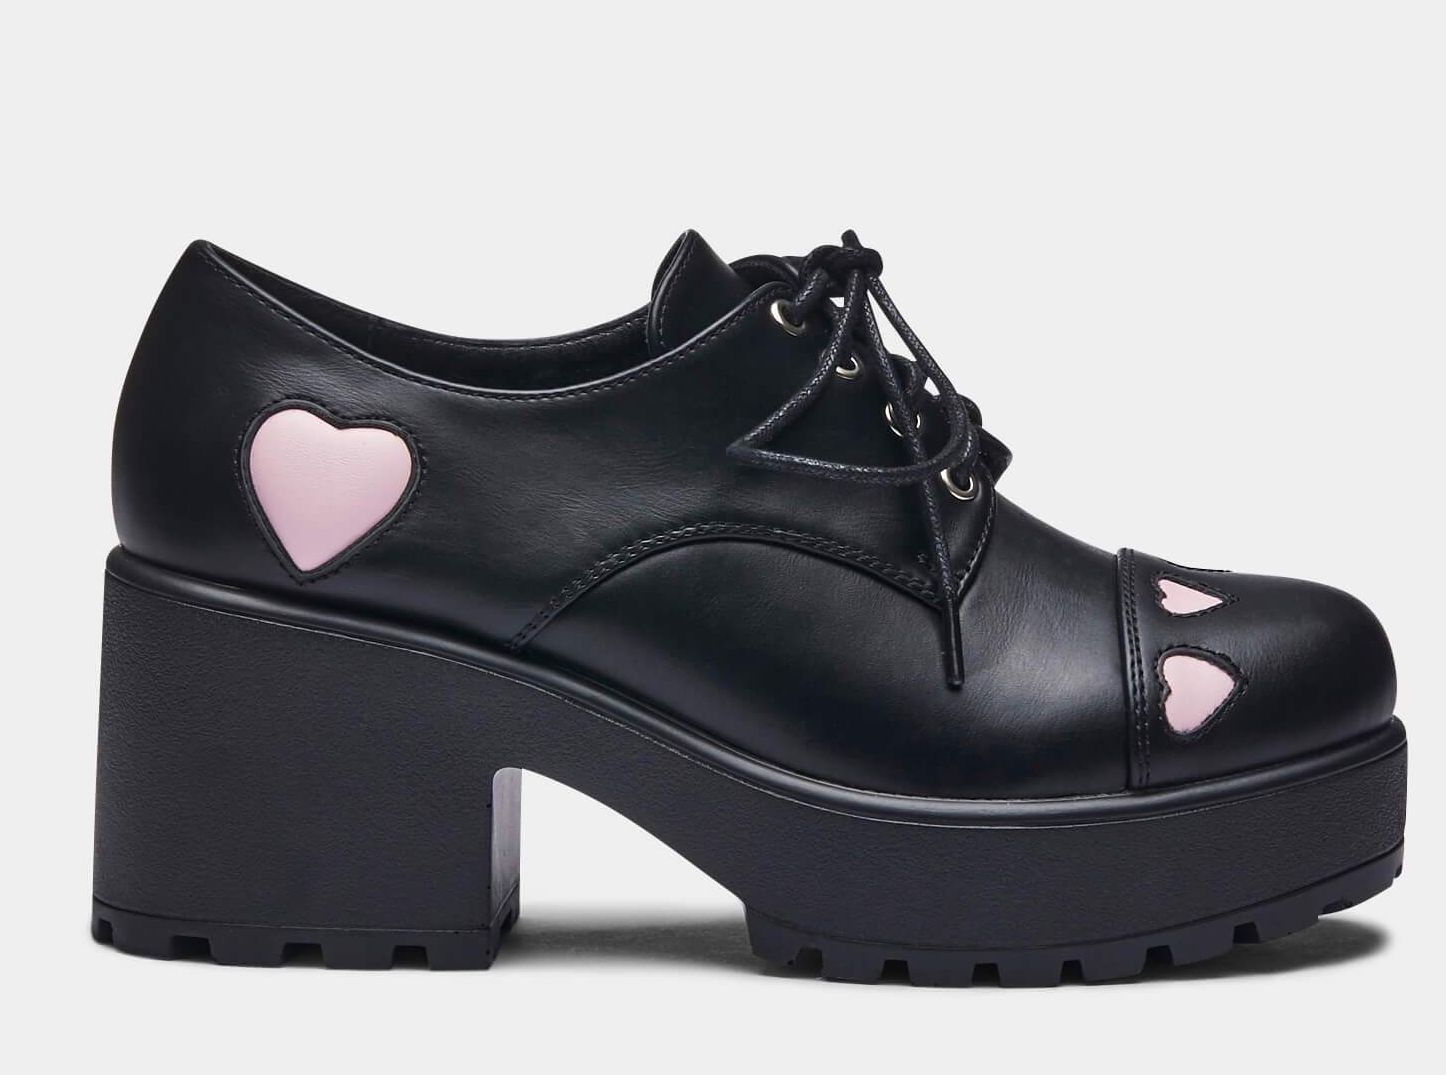 kfnd116bb_chaussures-mary-jane-plateforme-kawaii-glam-rock-tennin-heart